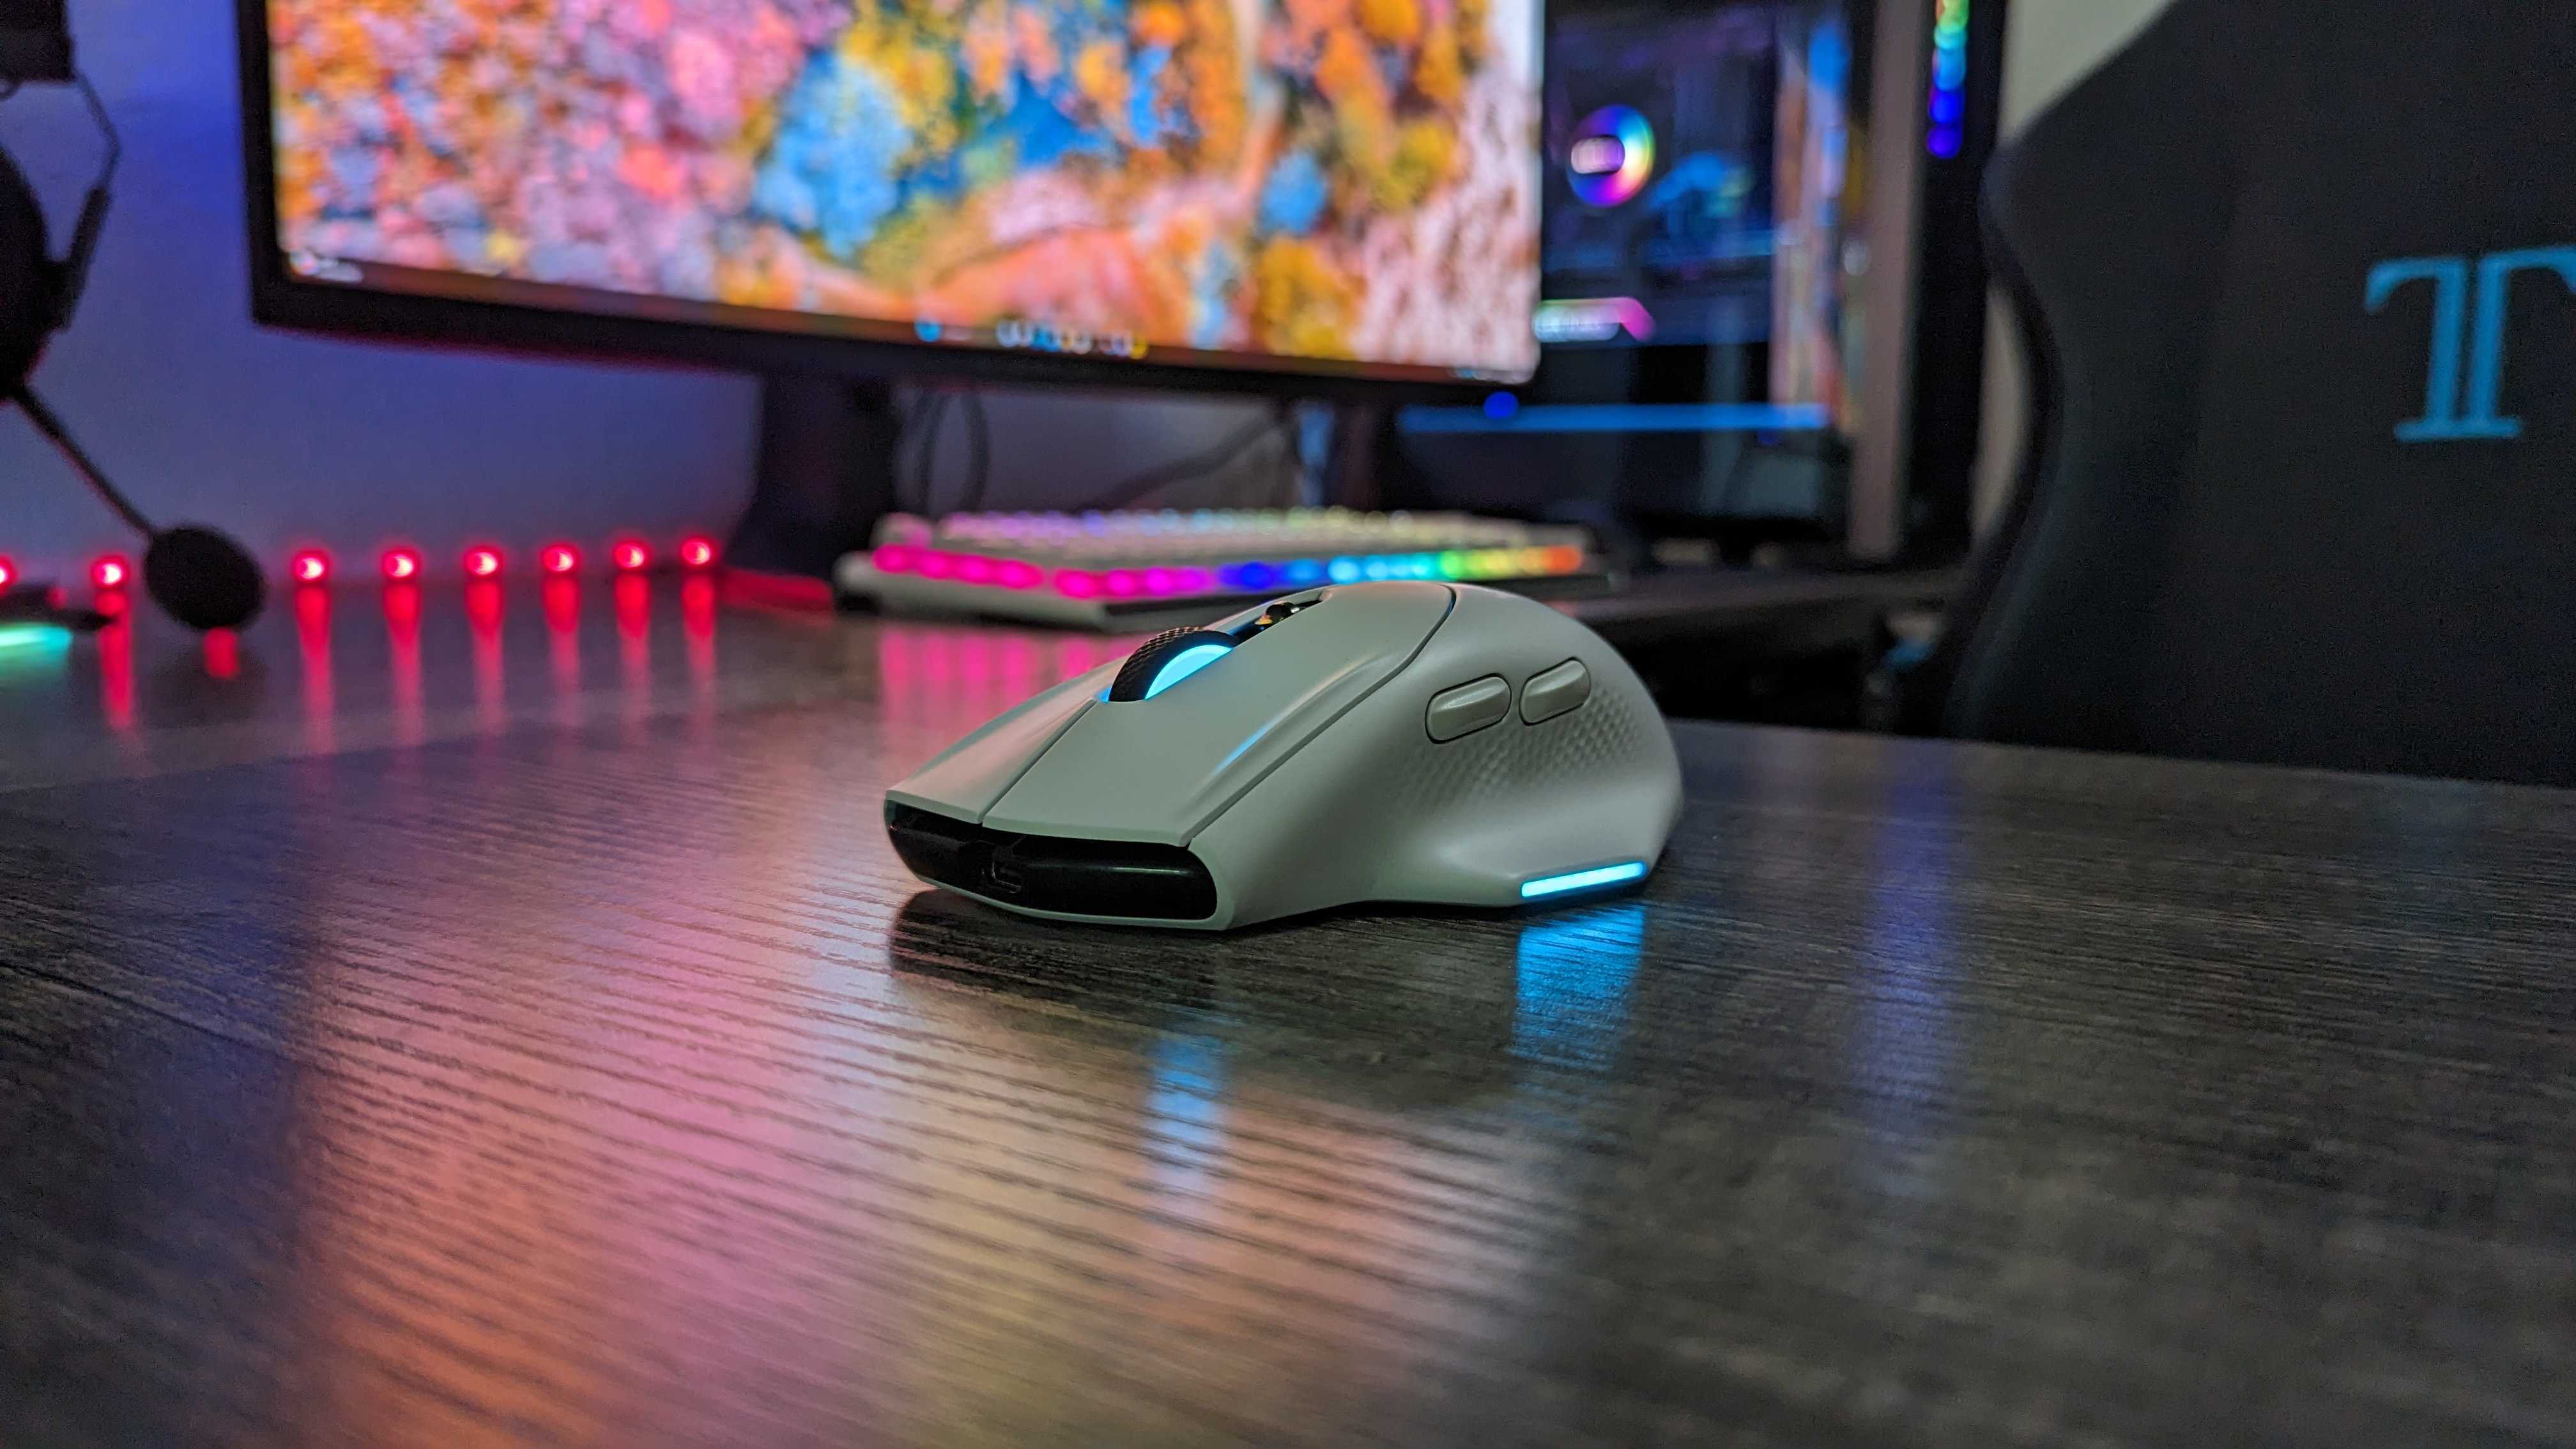 alienware wireless mouse